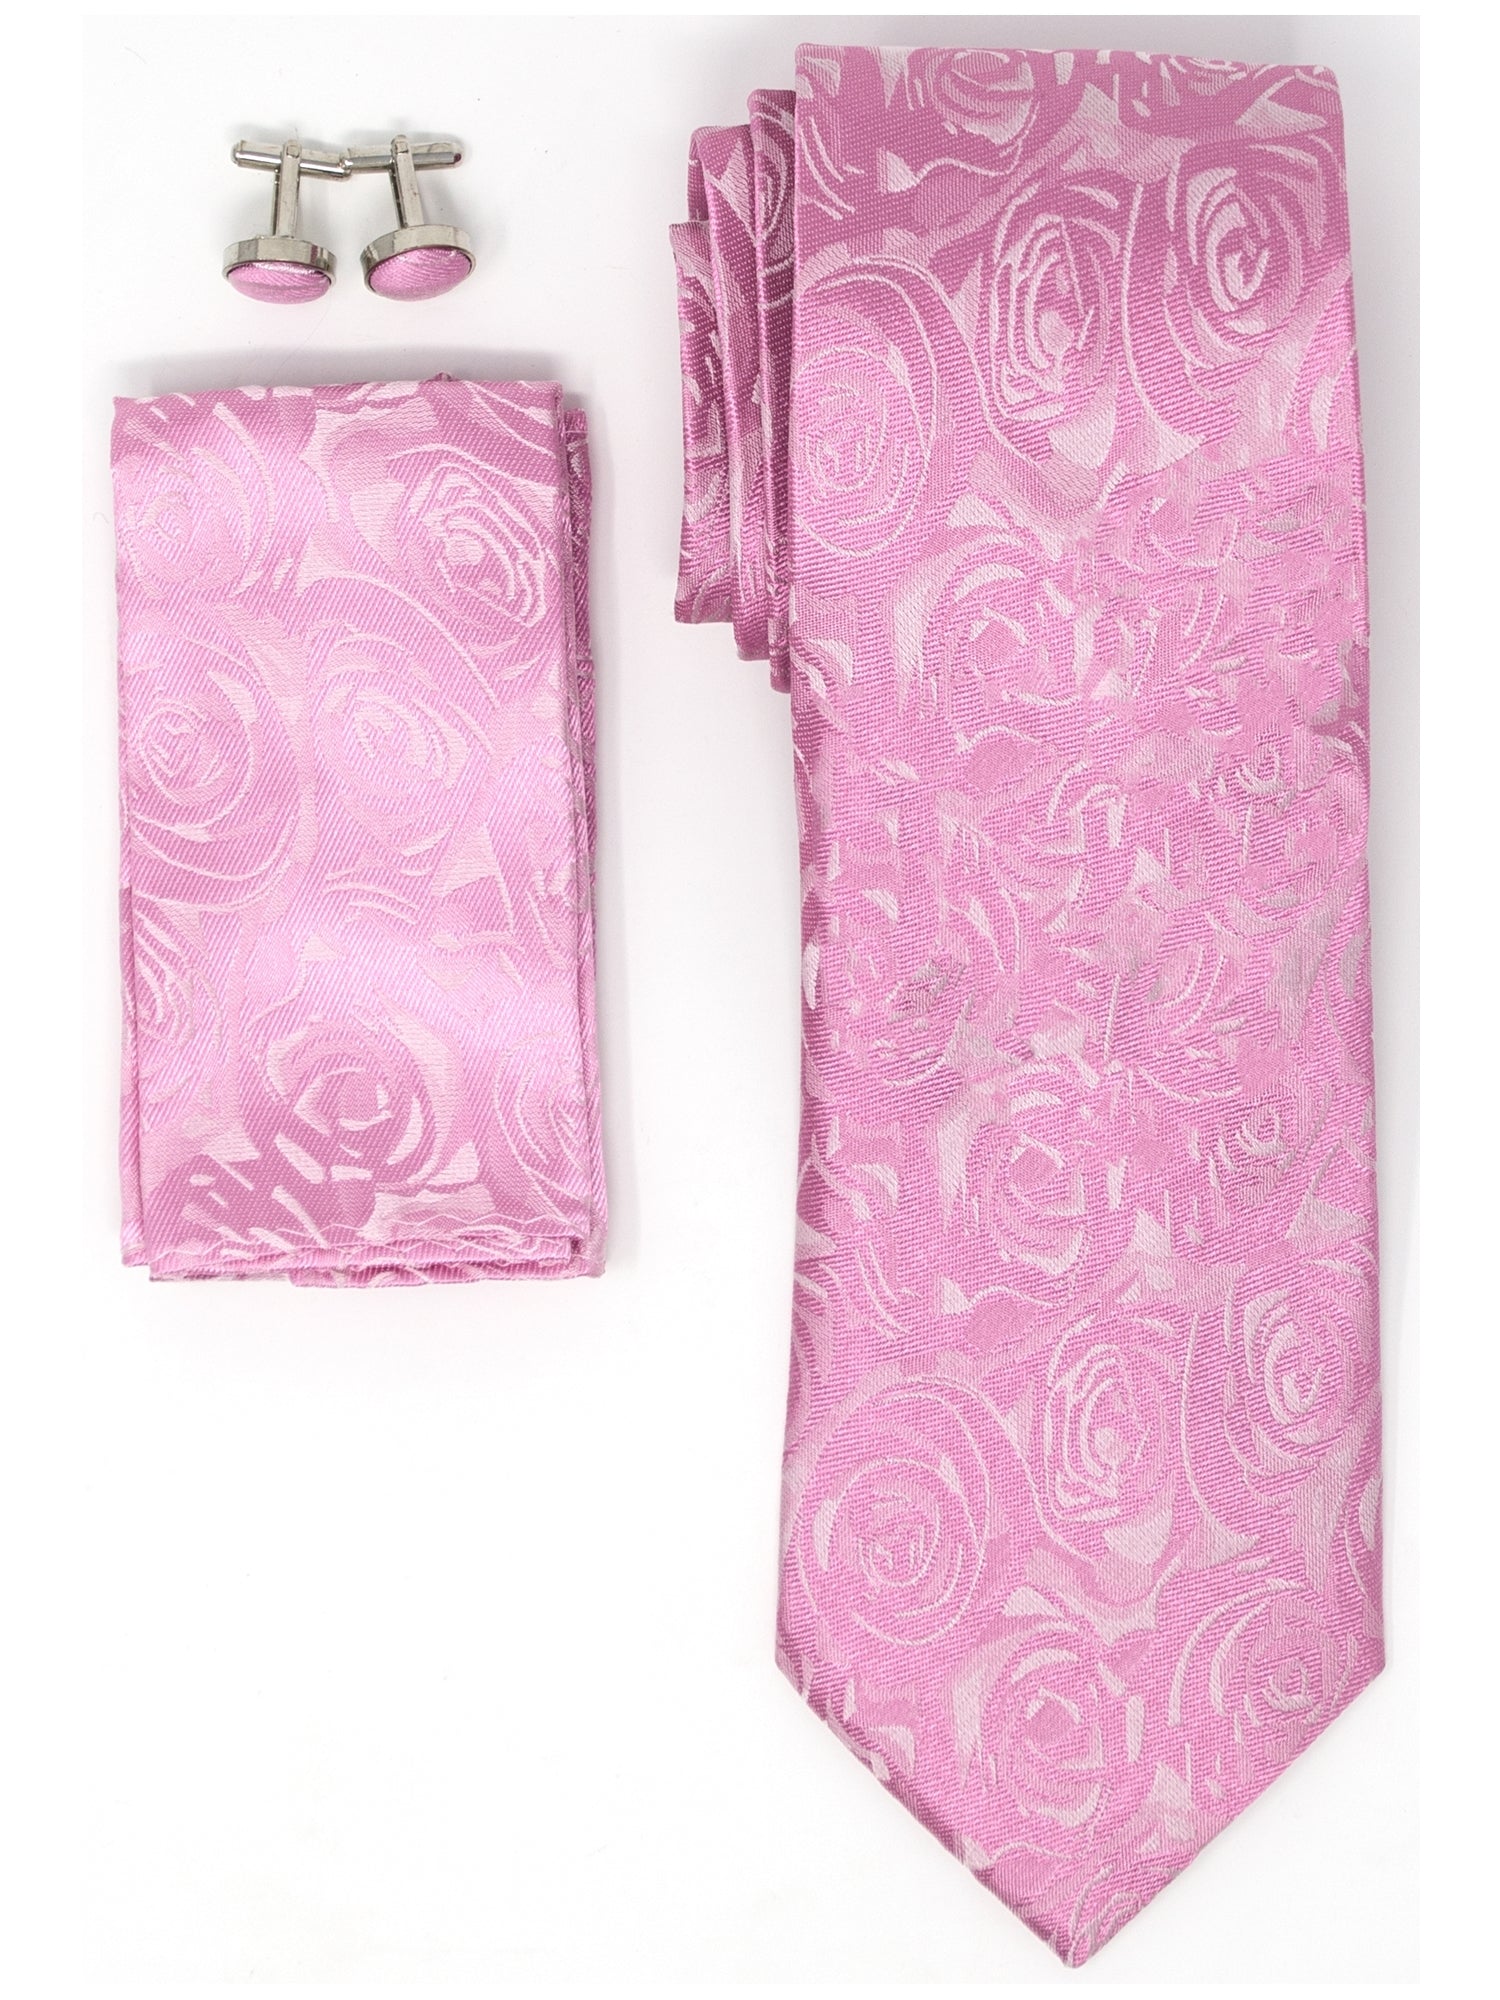 Men's Silk Neck Tie Set Cufflinks & Hanky Collection Neck Tie TheDapperTie Pink Rose Floral Regular 